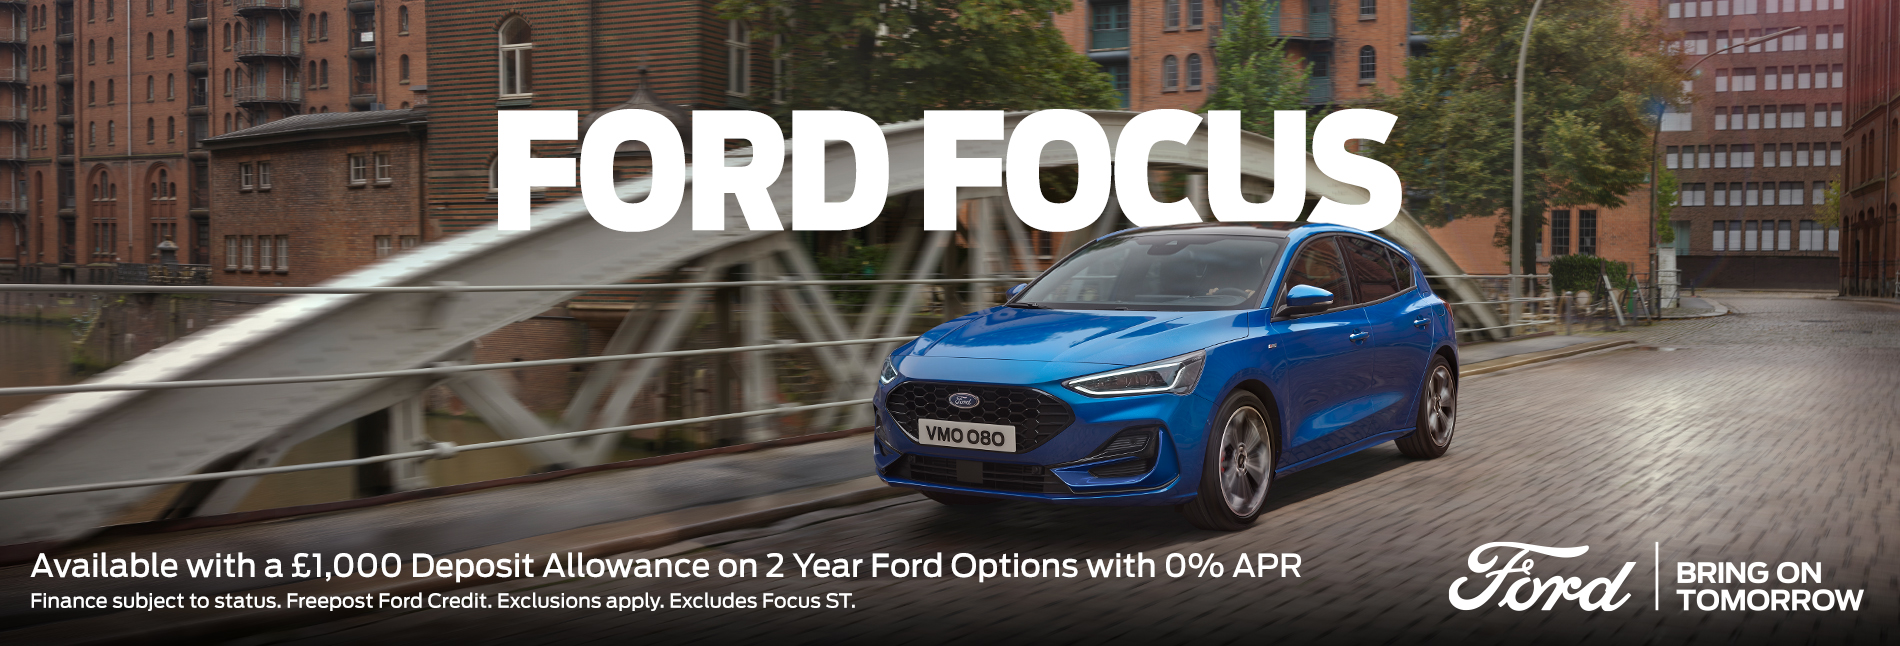 Ford Focus 0% APR offer